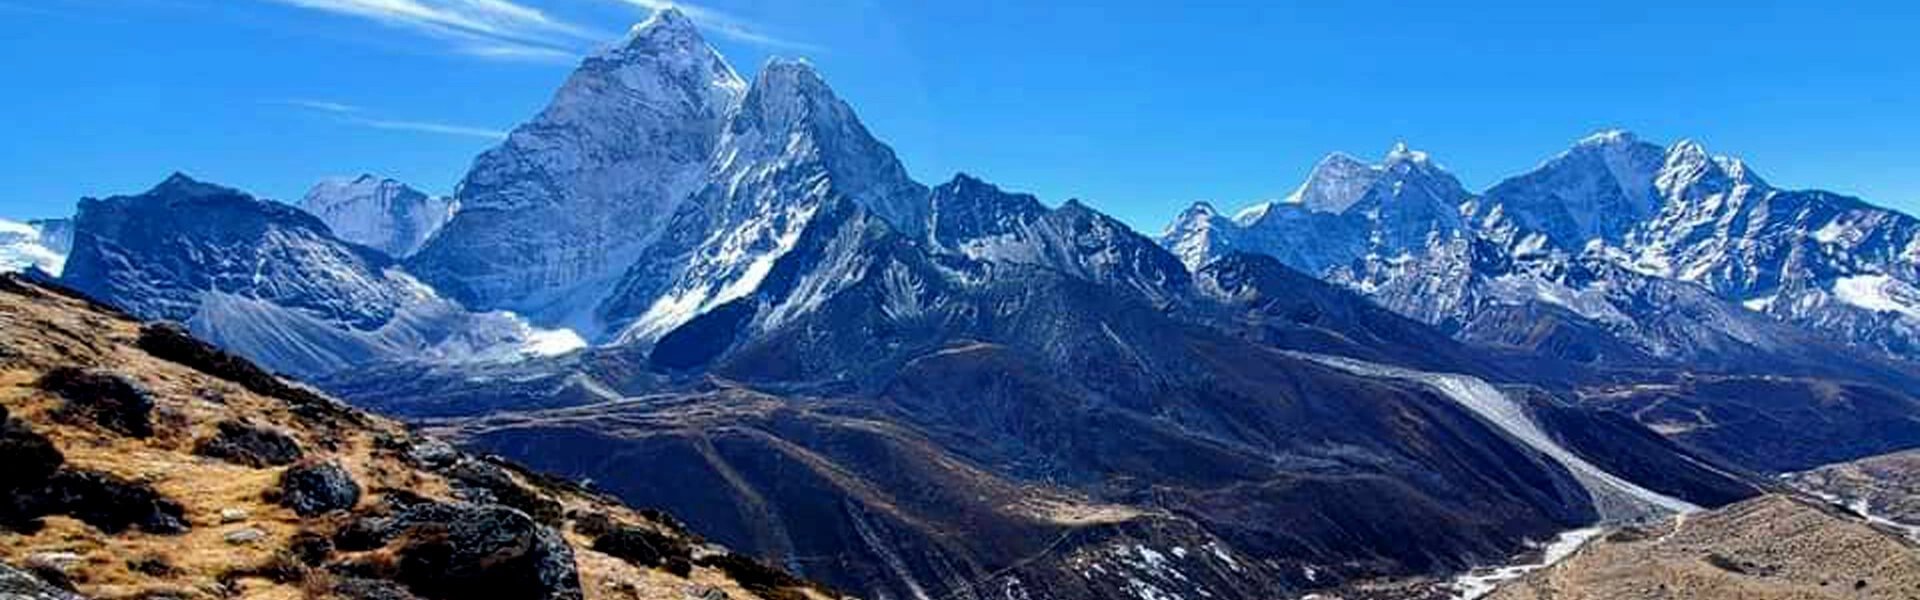 Gorgeous sight seen during the Everest Base Camp and Kala Patthar Trek